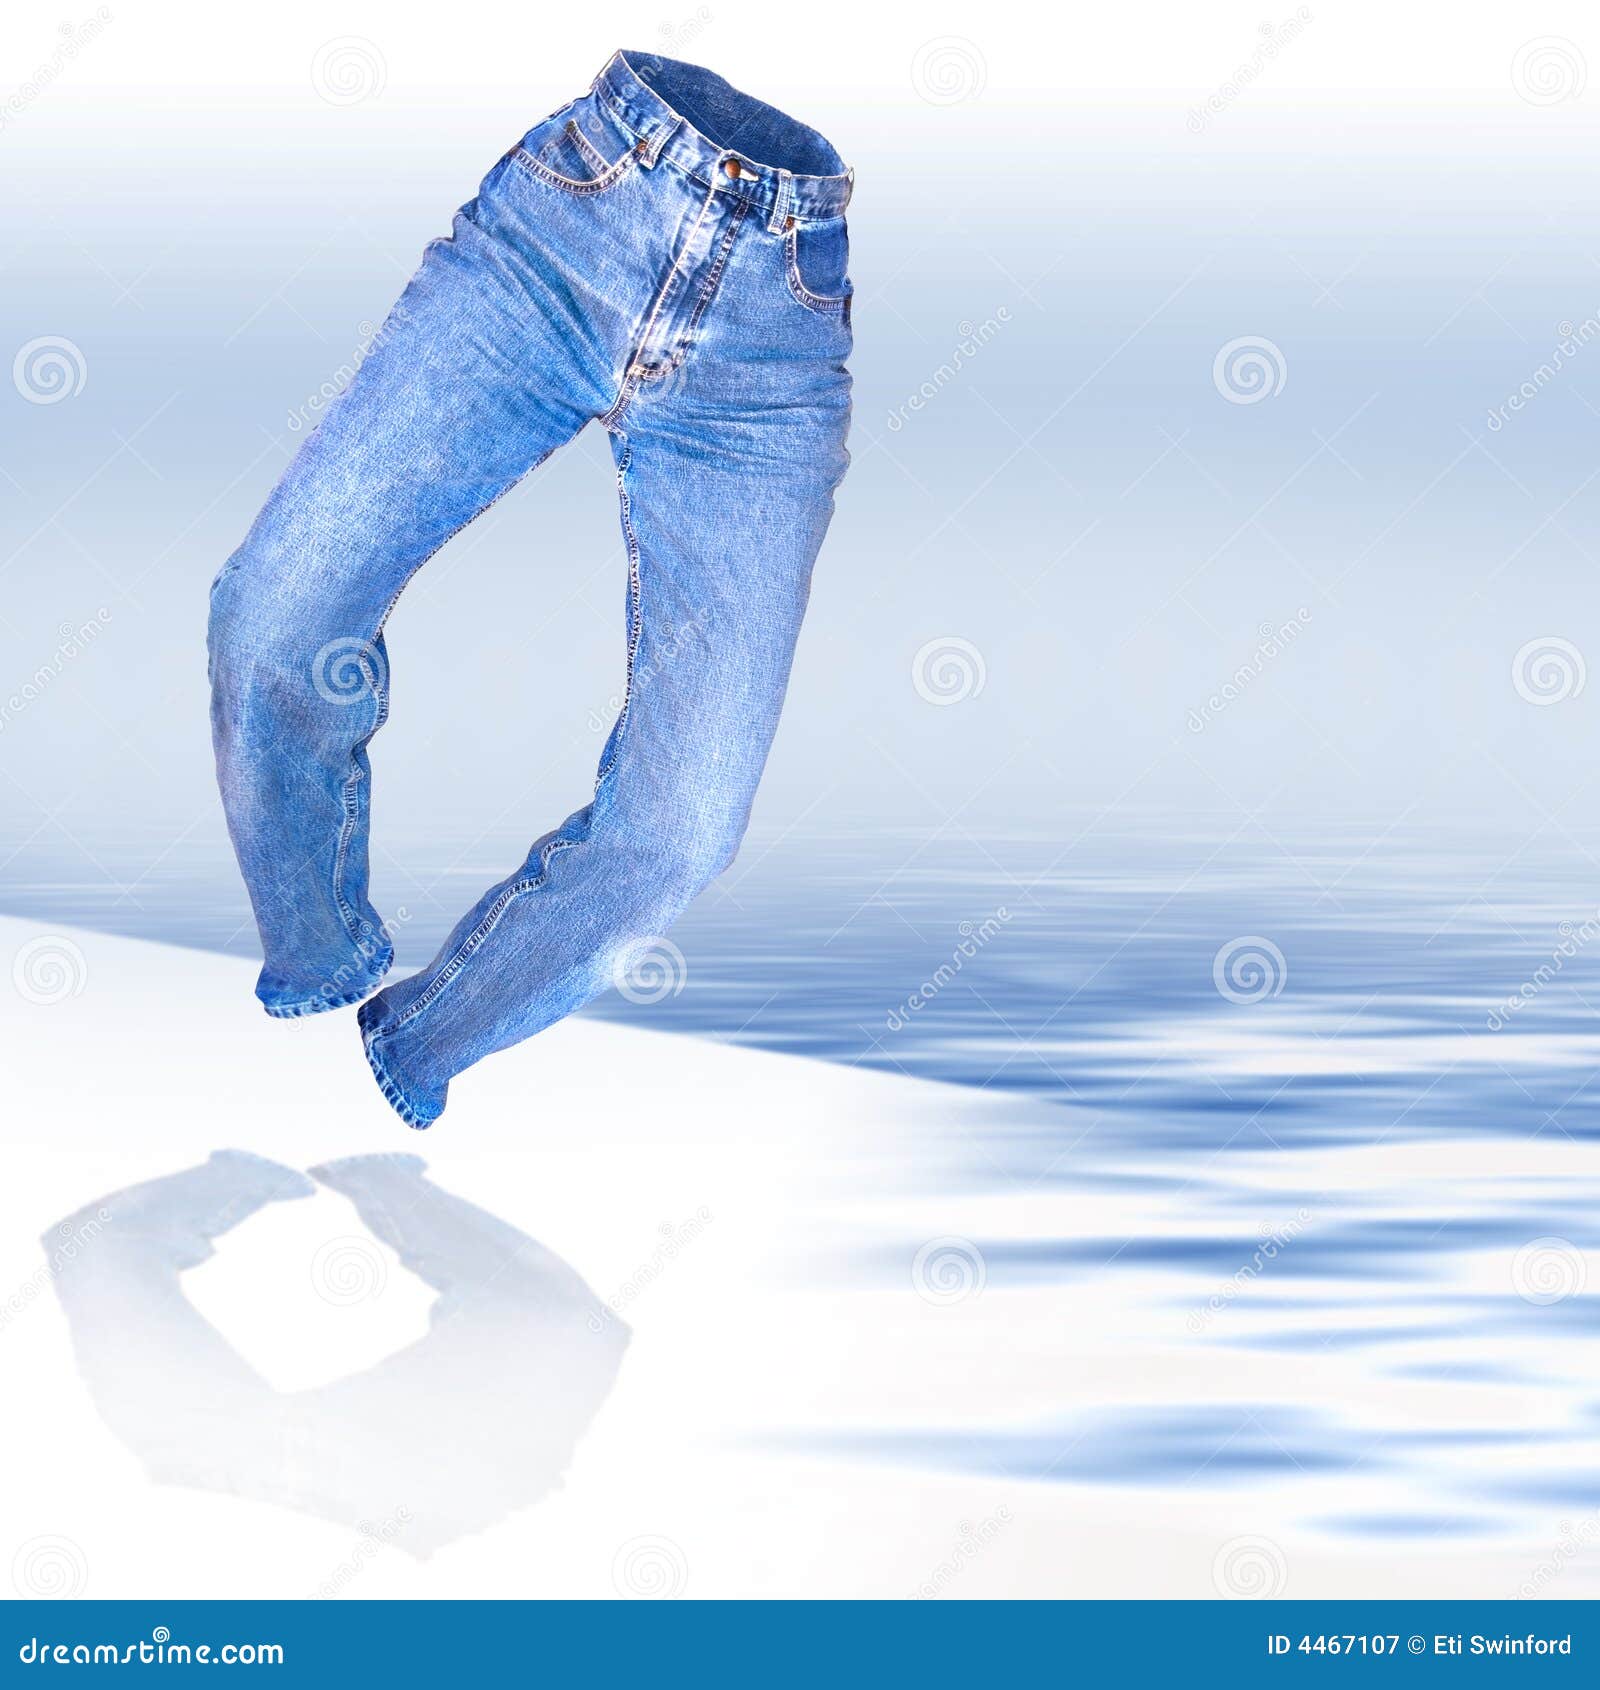 clip art of denim jeans - photo #21